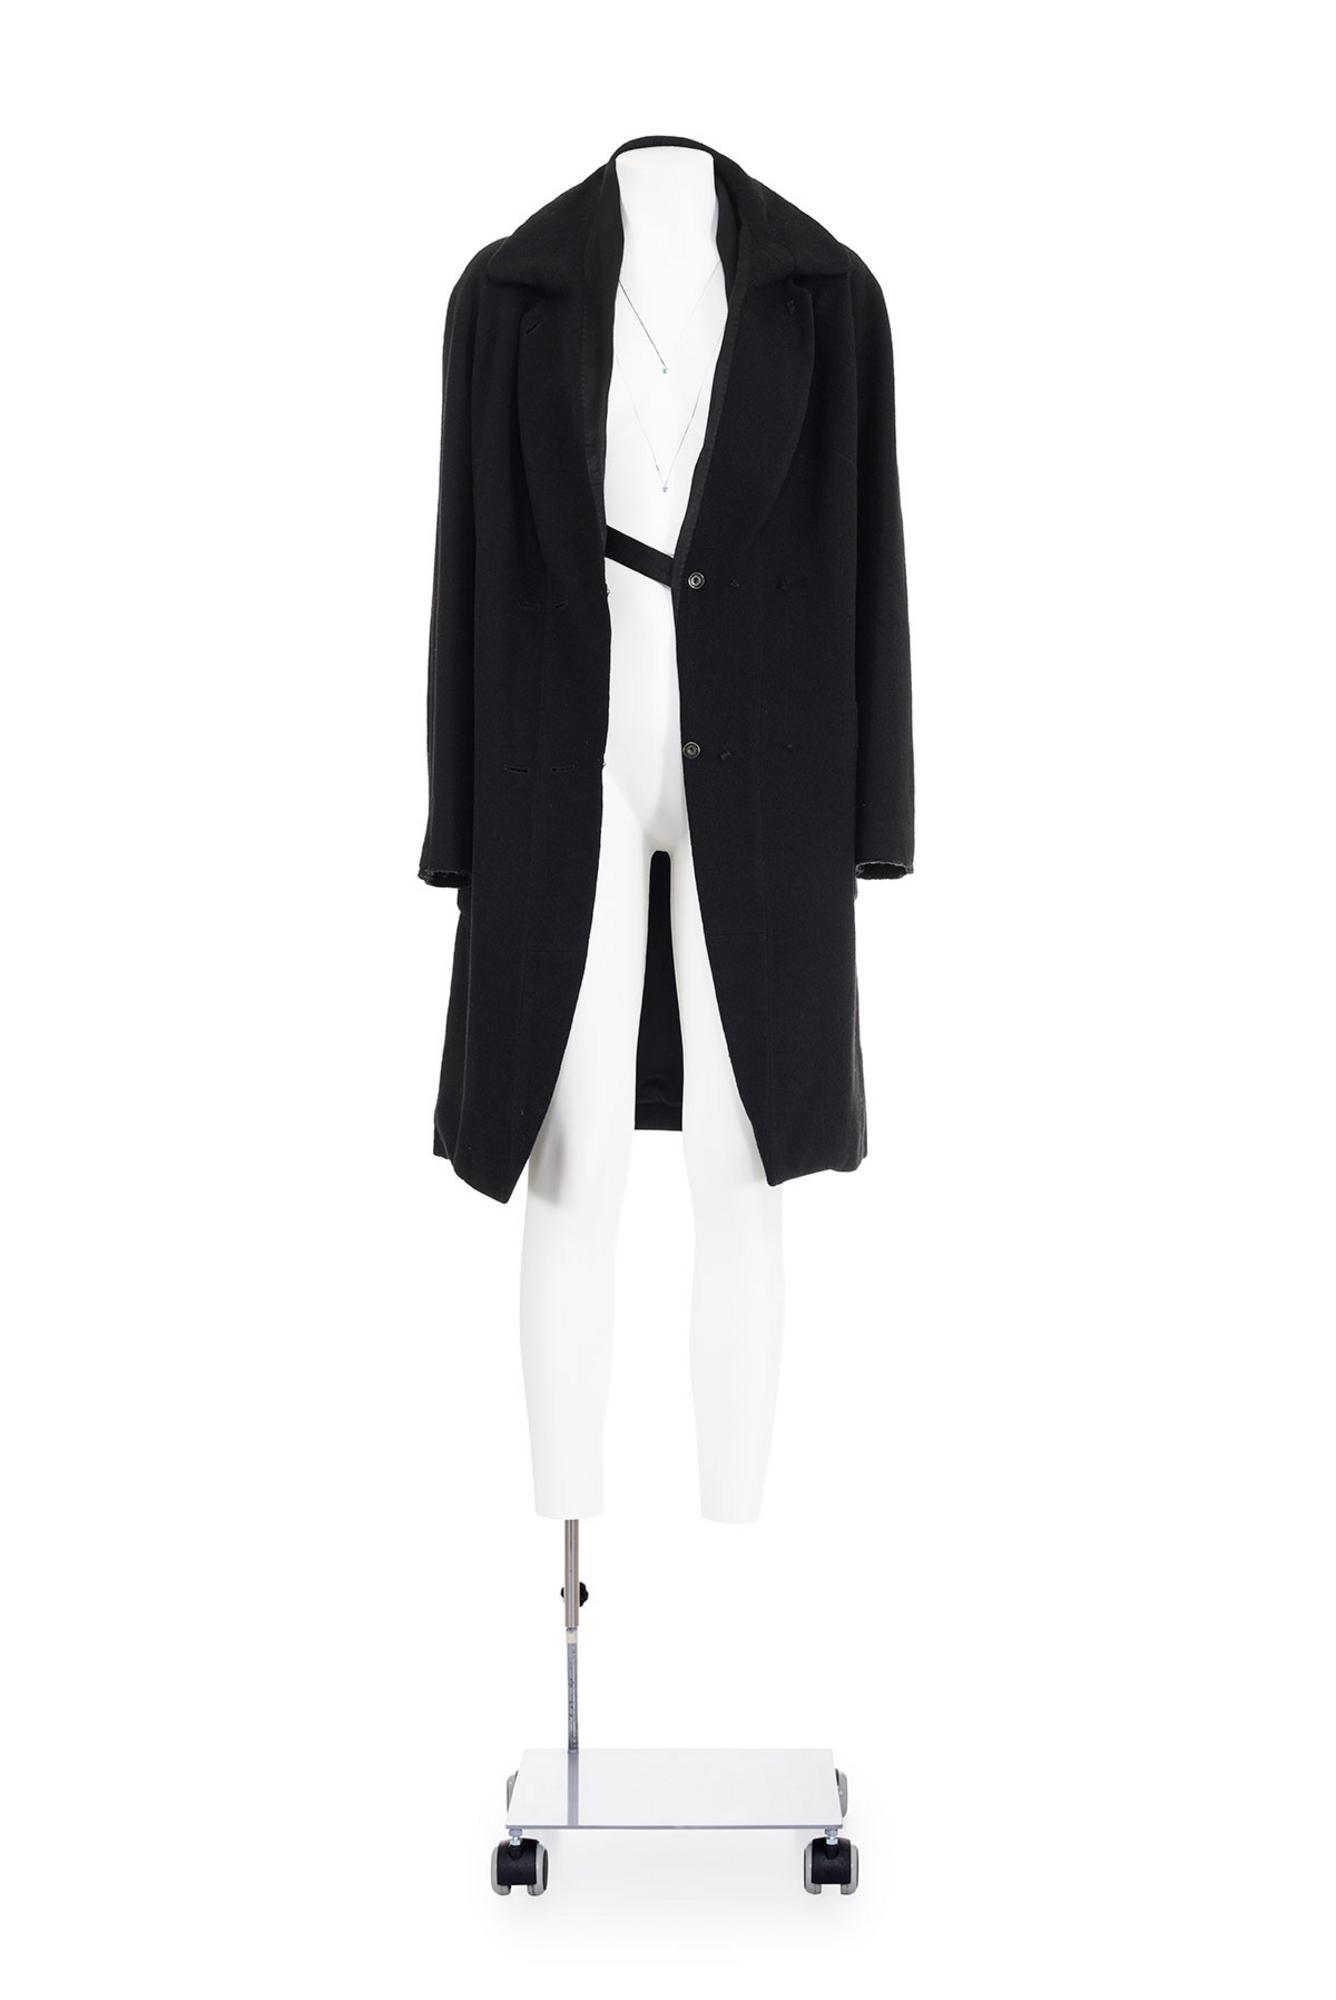 MAISON MARTIN MARGIELA Coat with visible lining DESCRIPTION: Black coat with...